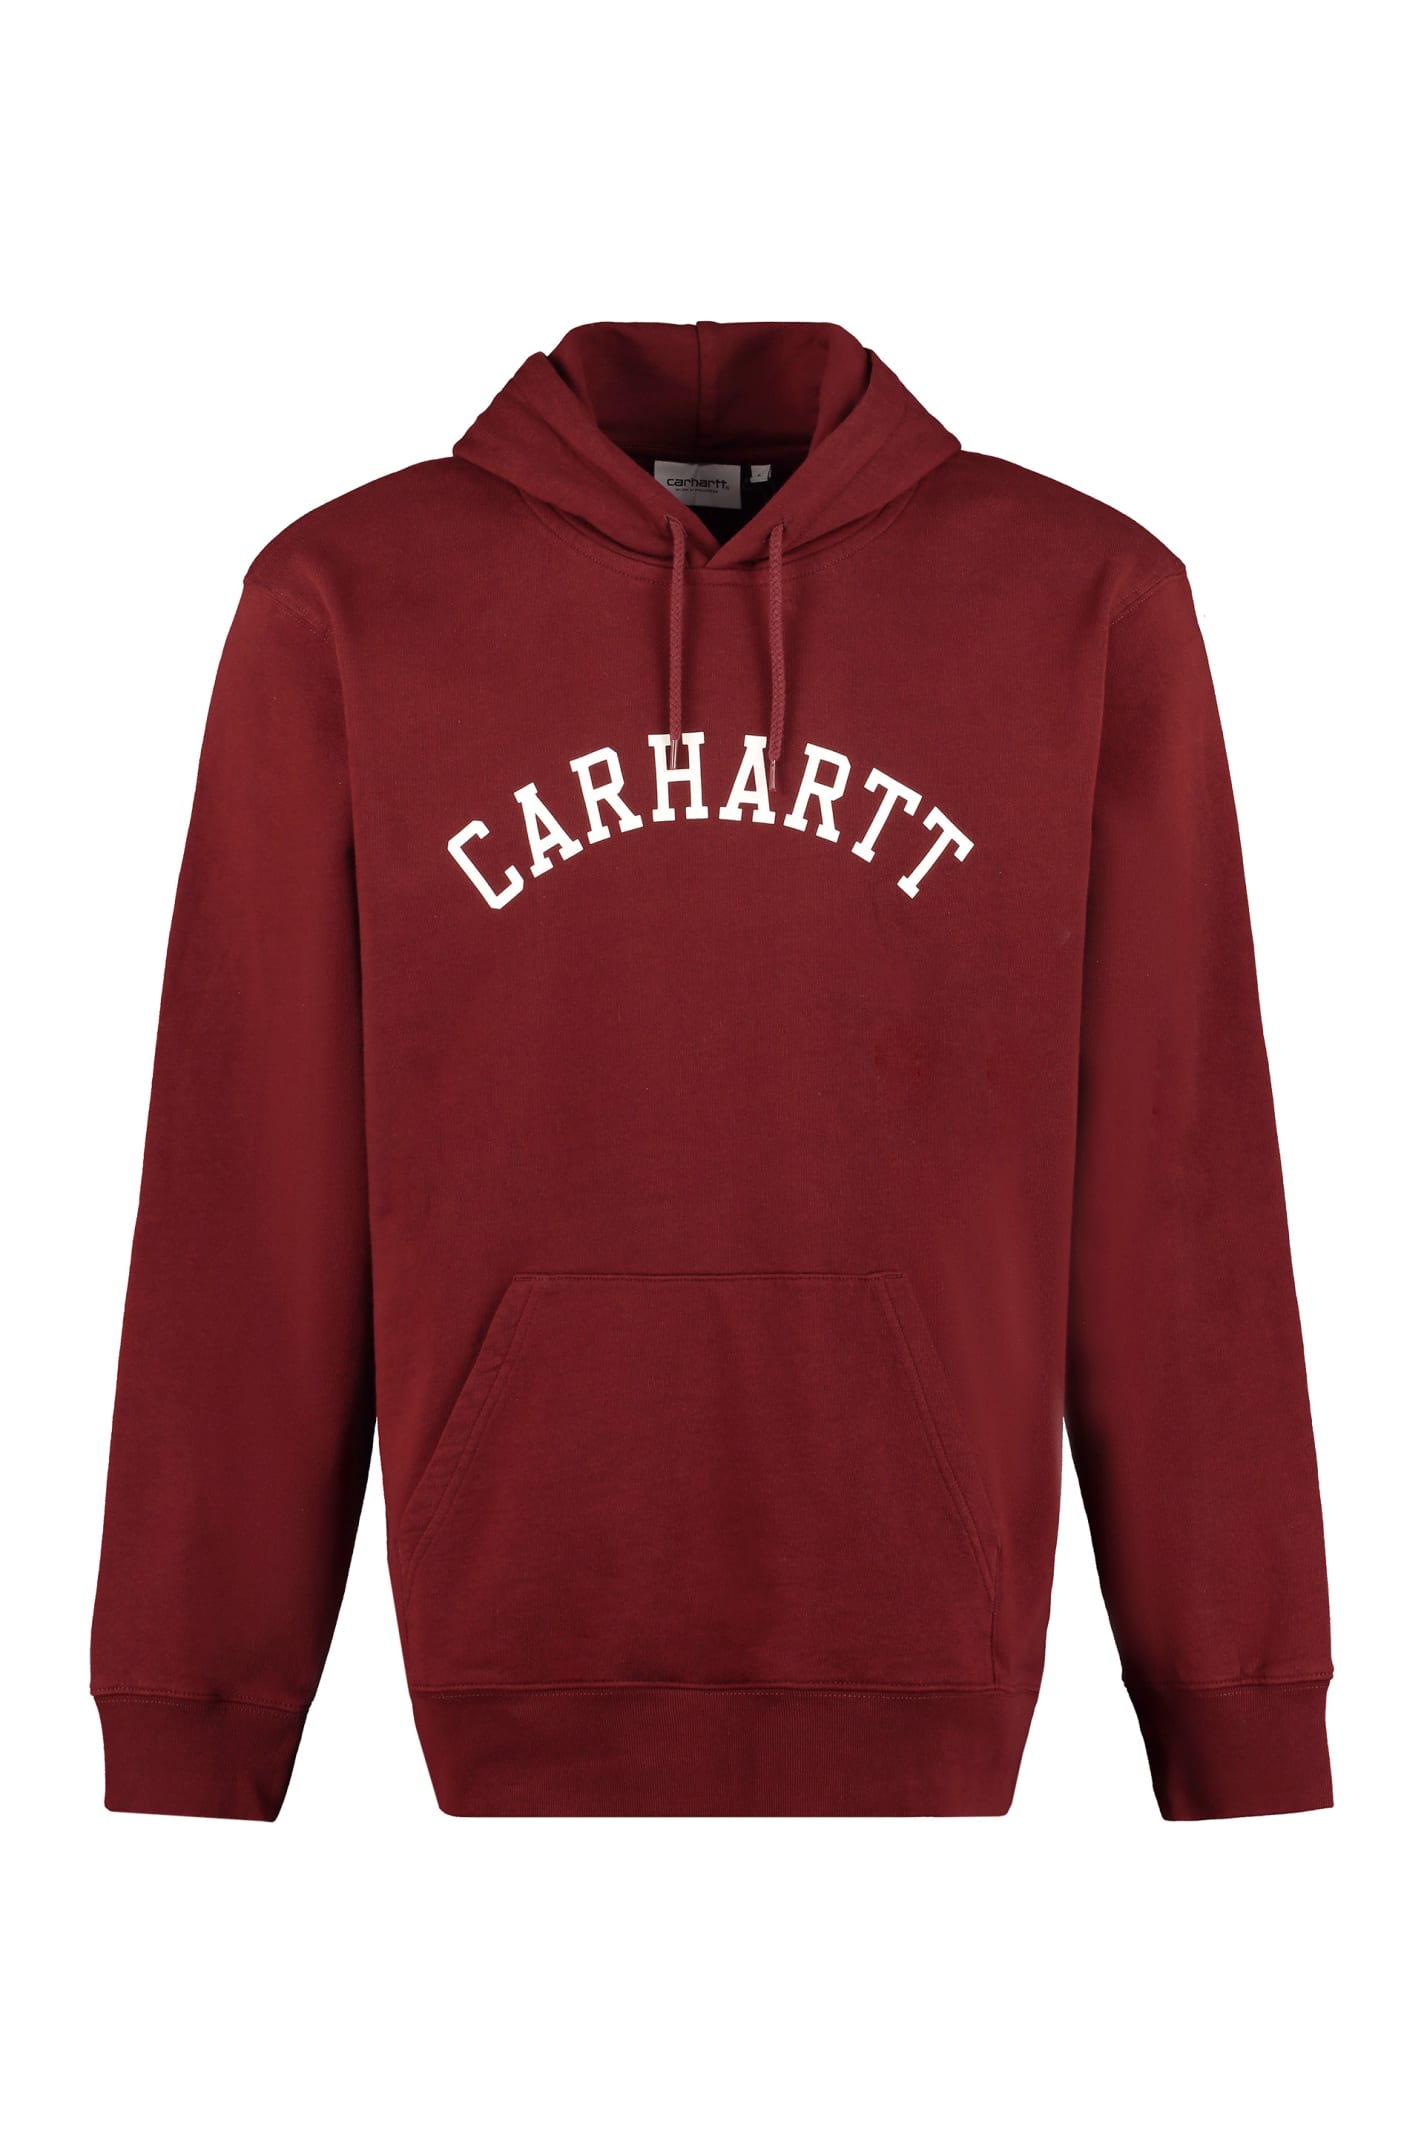 Carhartt Cotton Hoodie